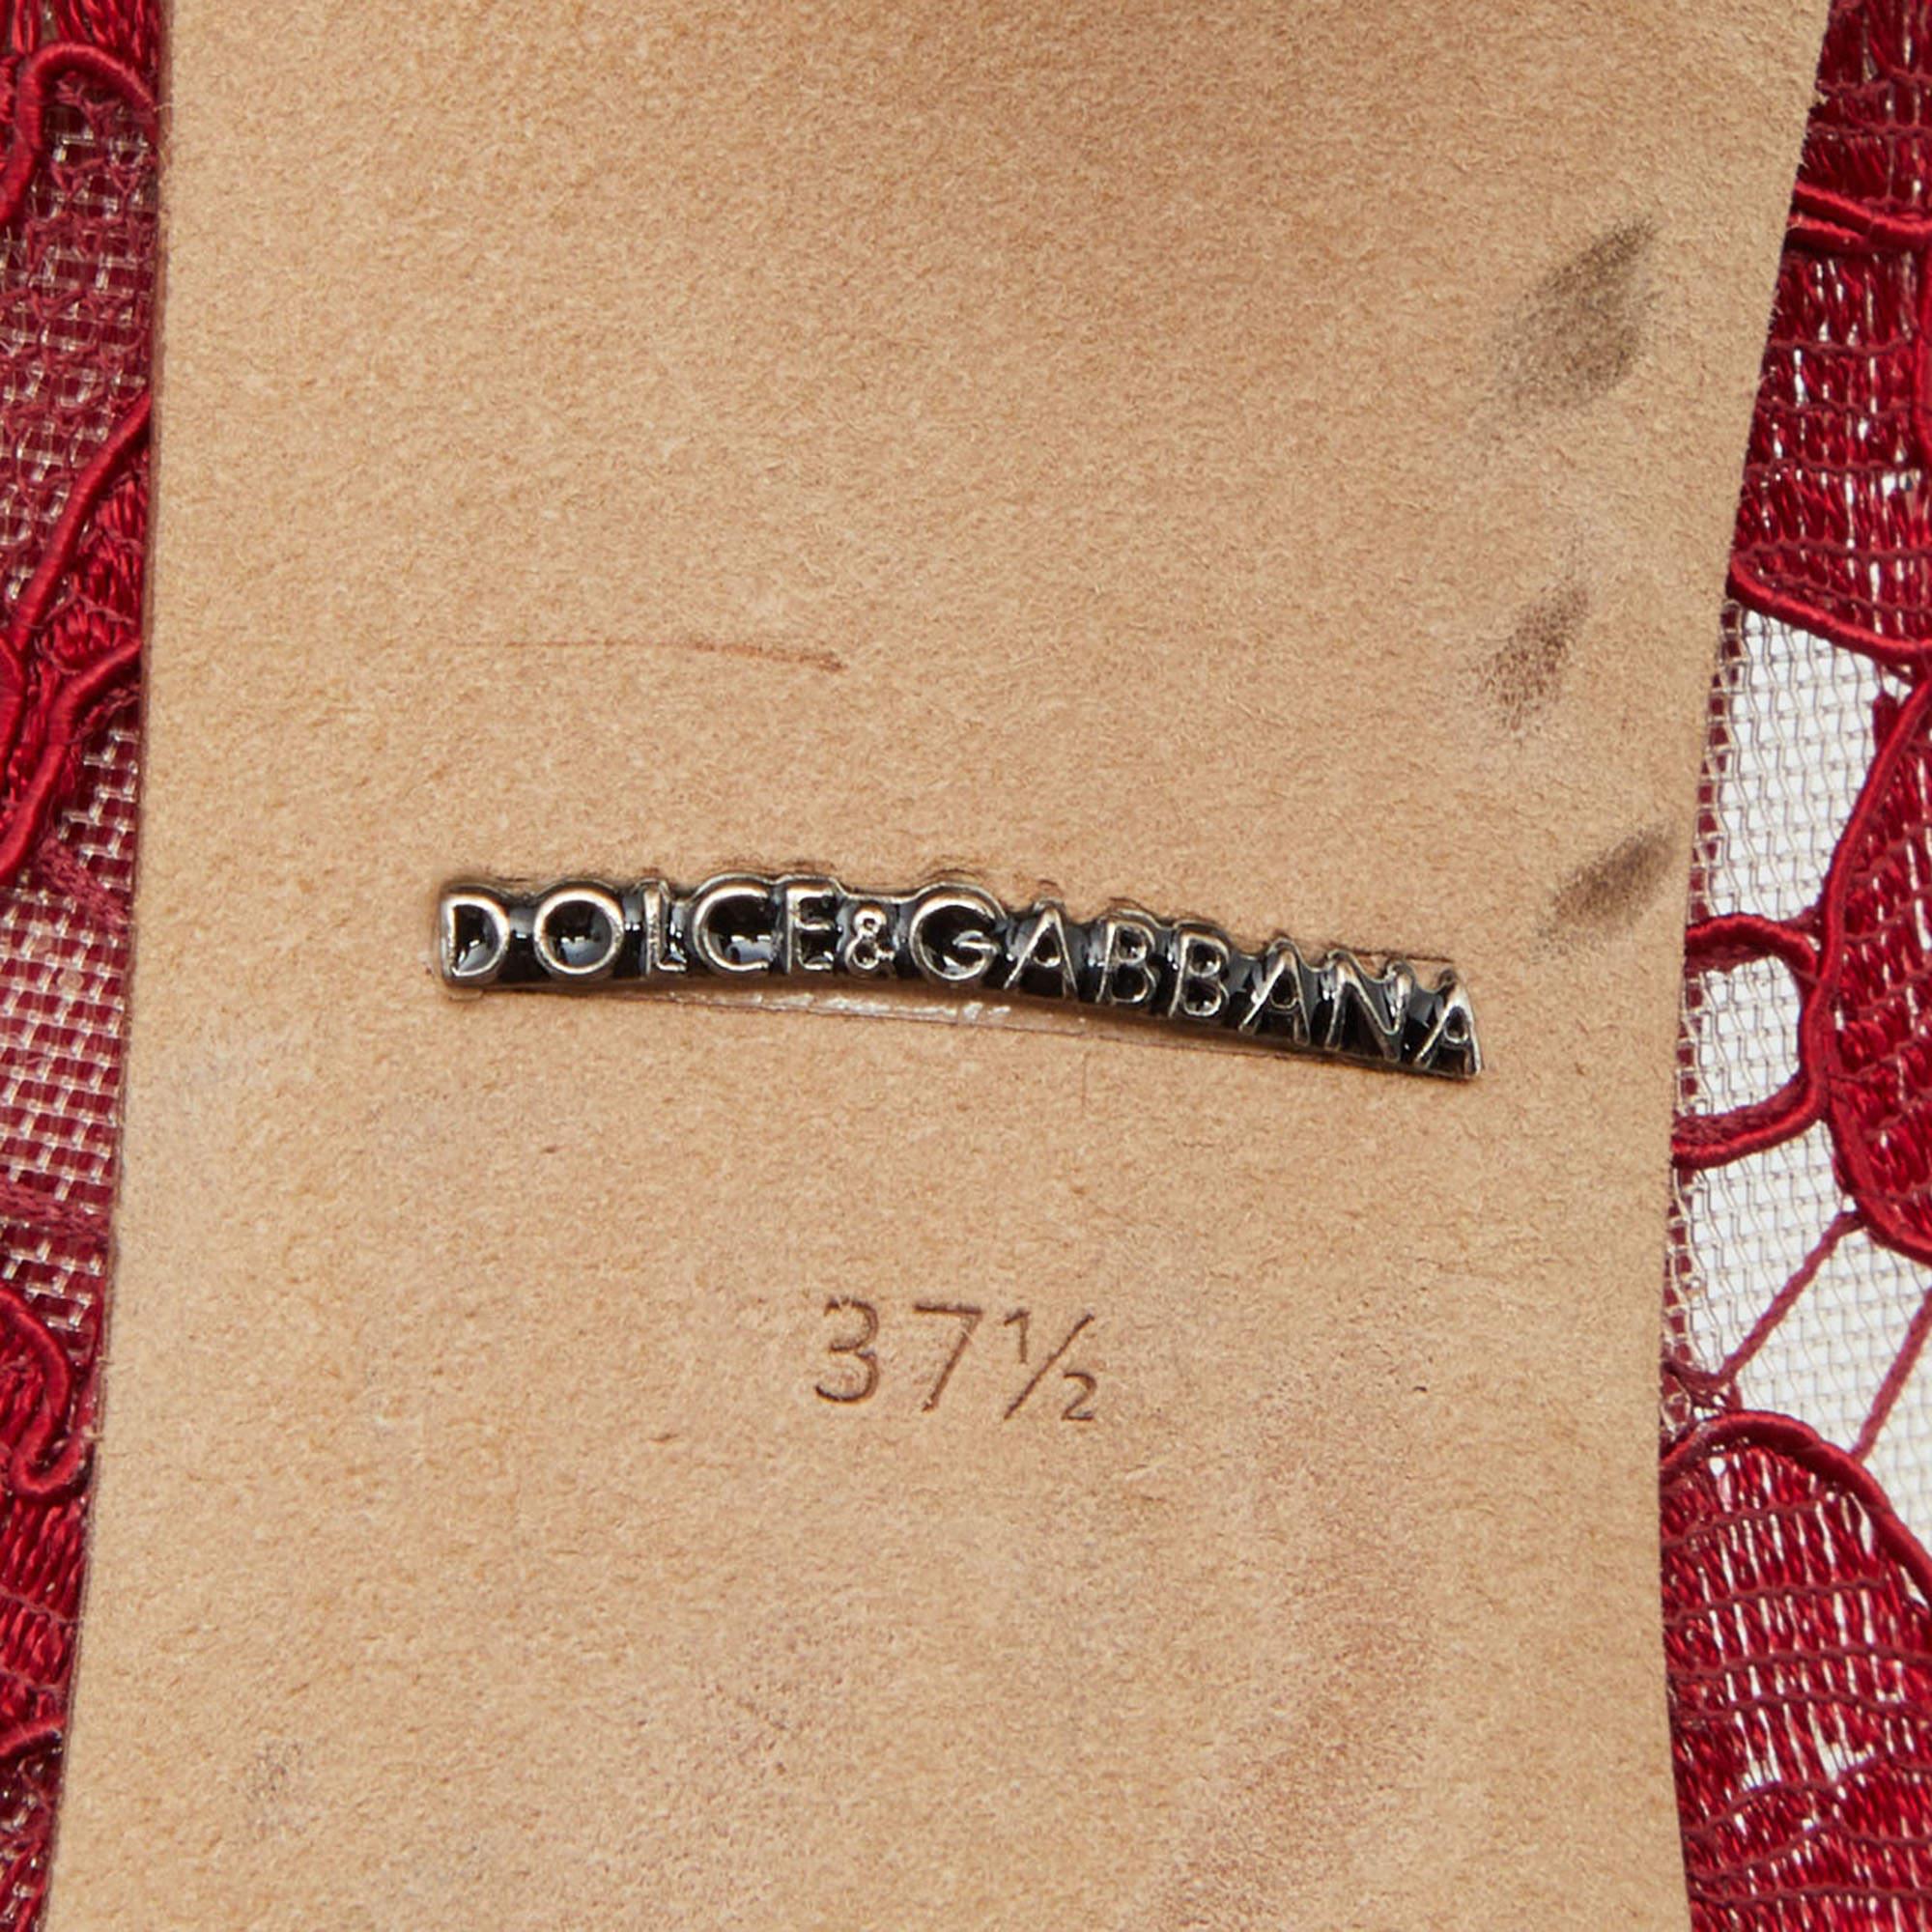 Dolce & Gabbana Red Lace Bellucci Pumps Size 37.5 1